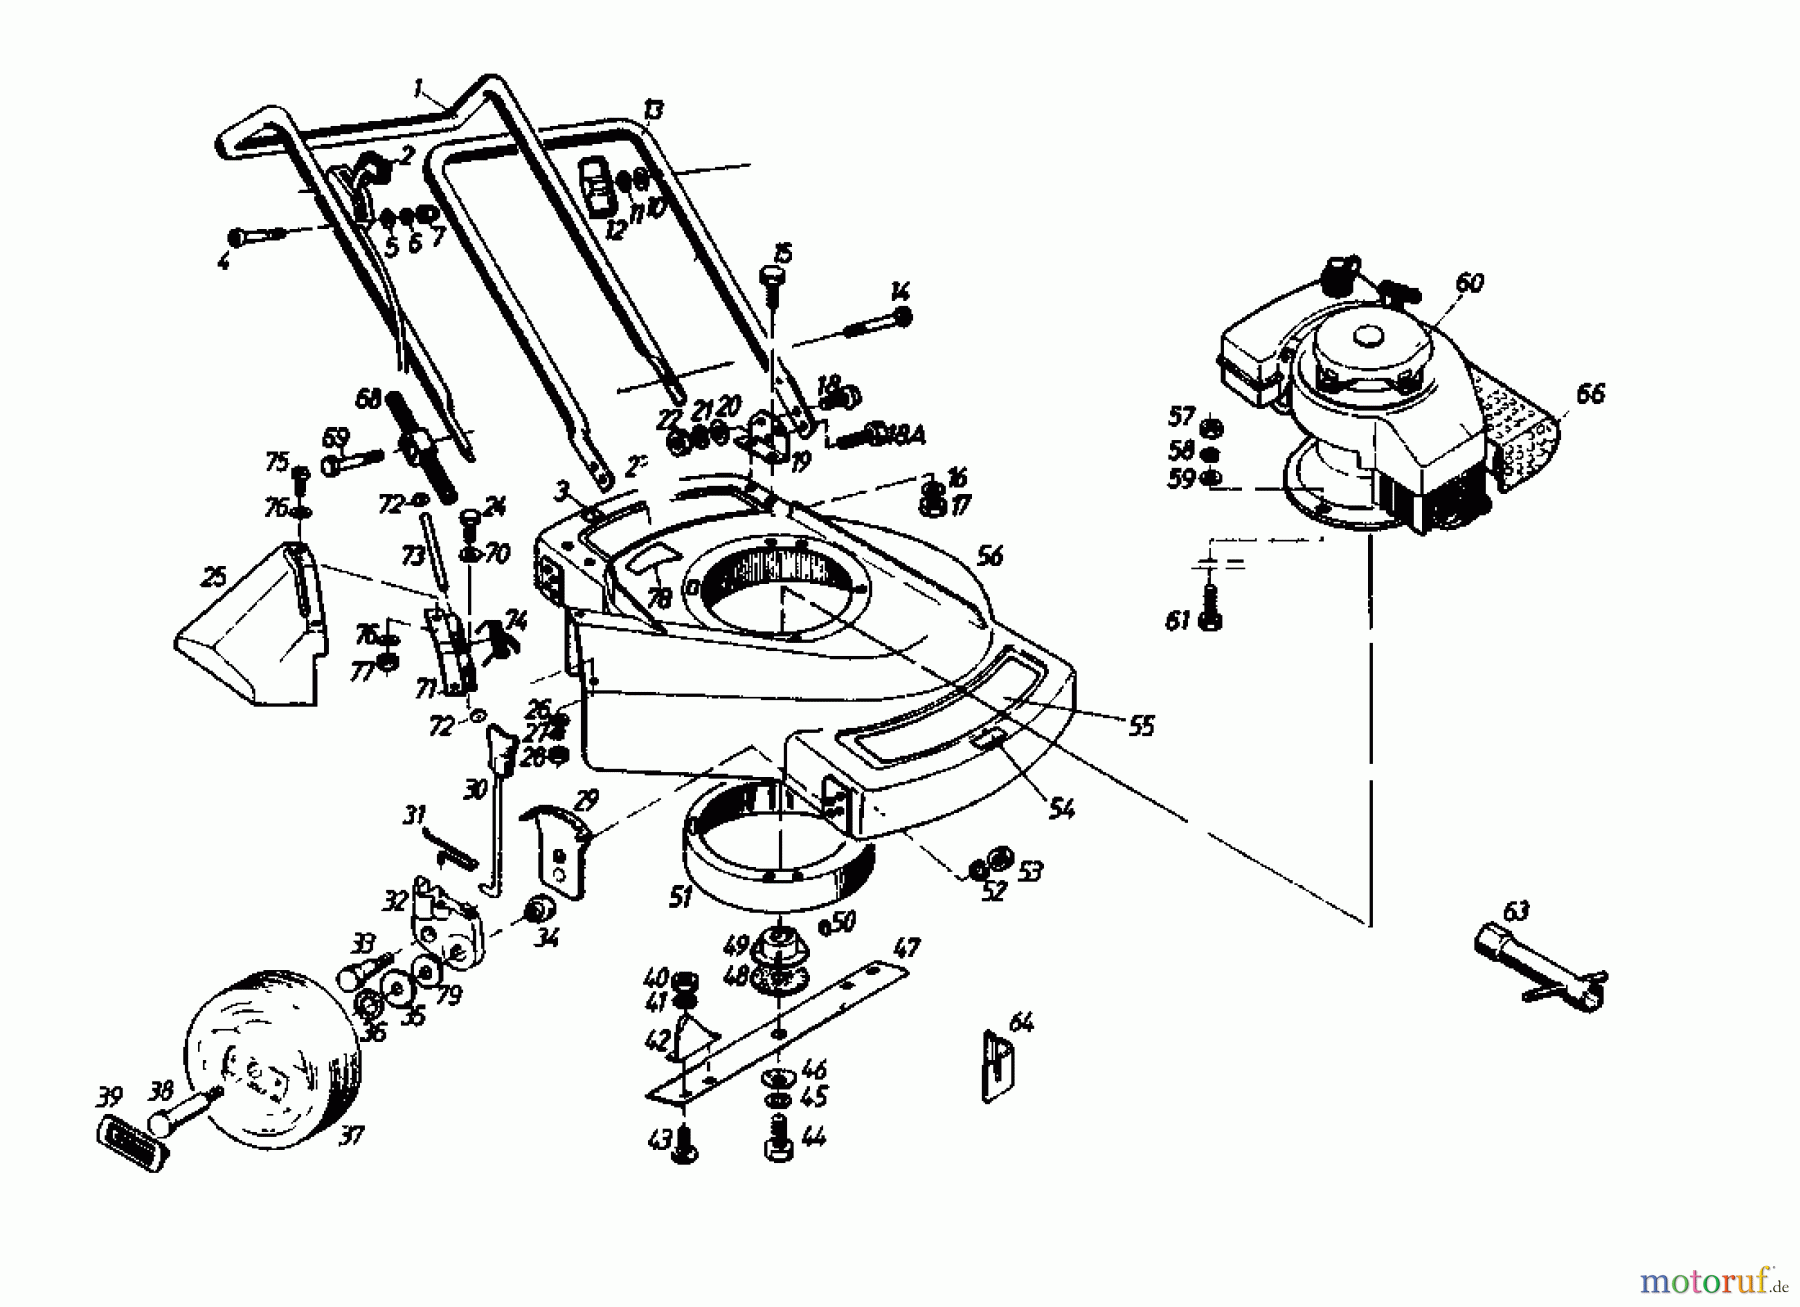  Gutbrod Petrol mower 135 BL 2 T 02869.06  (1988) Basic machine